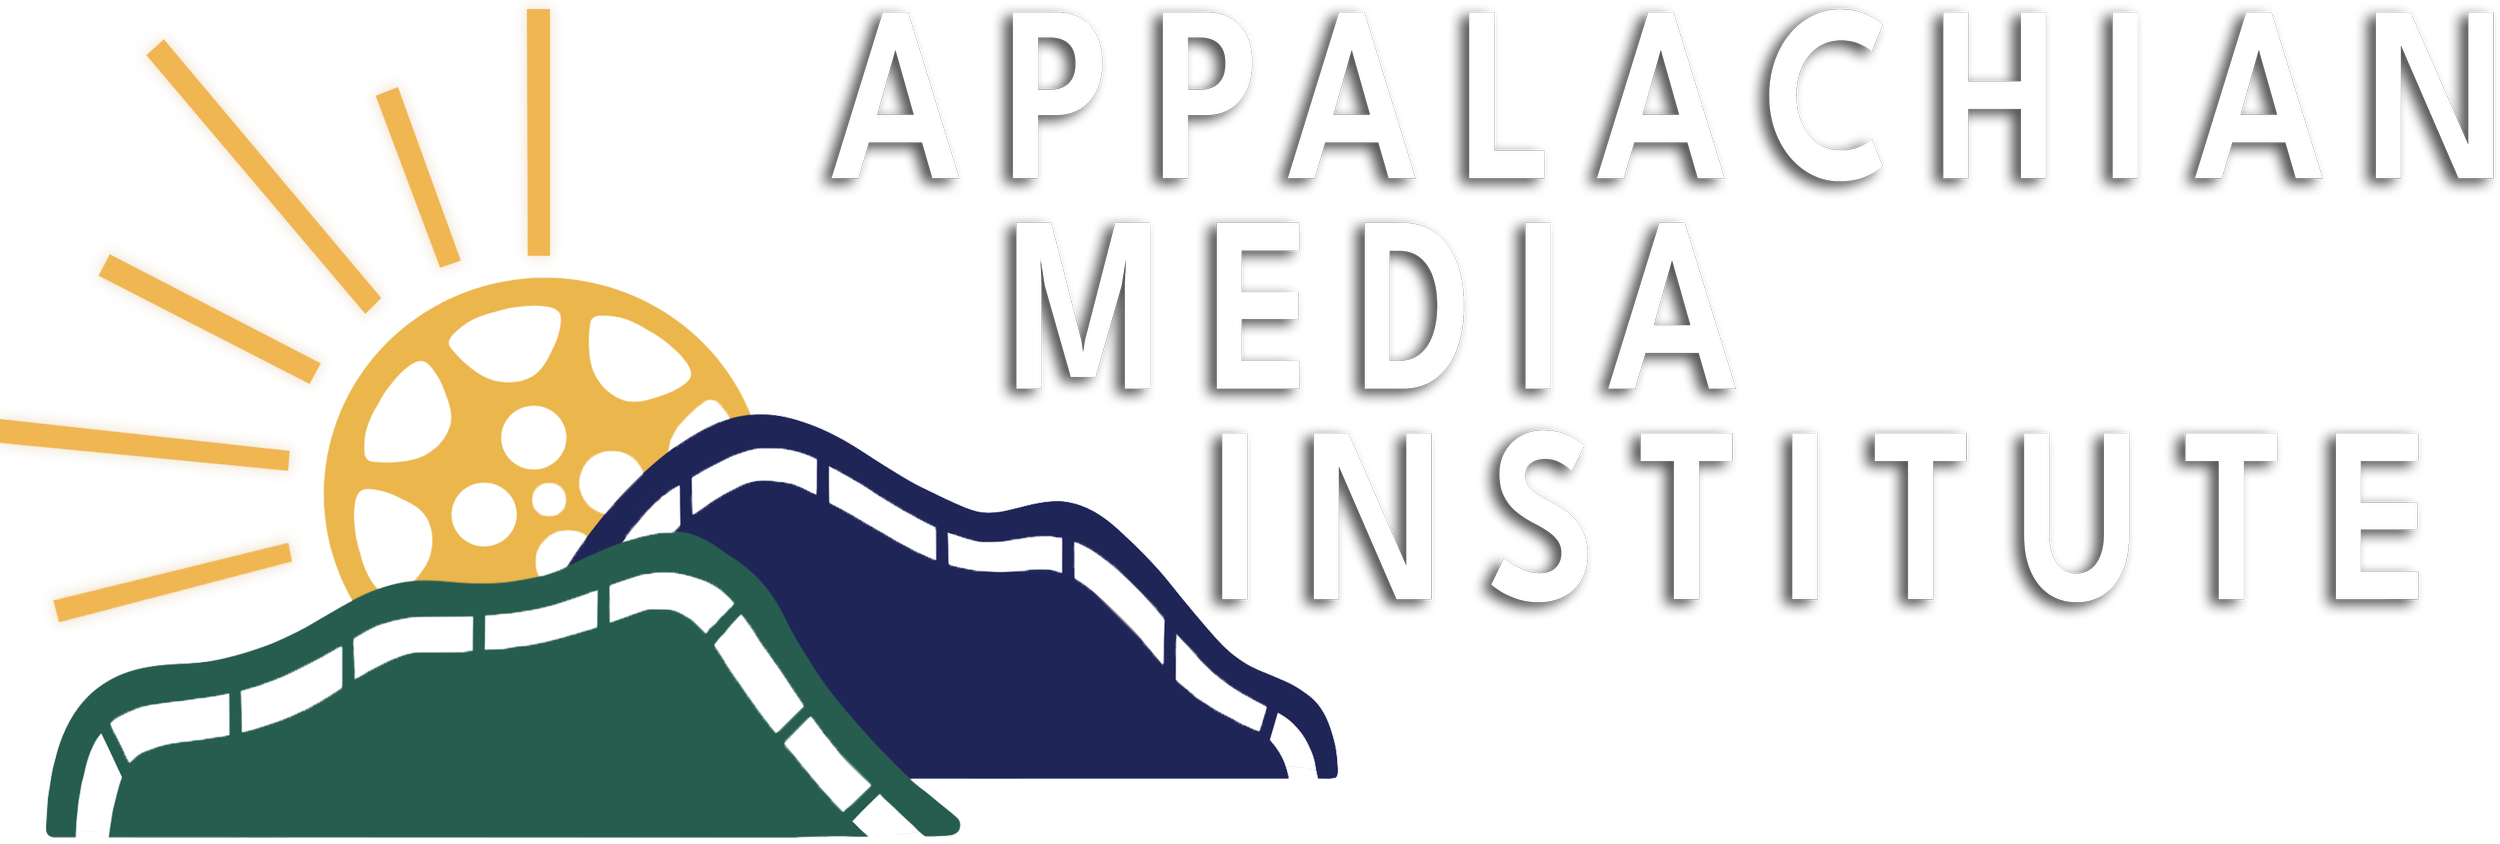 Appalachian Media Institute